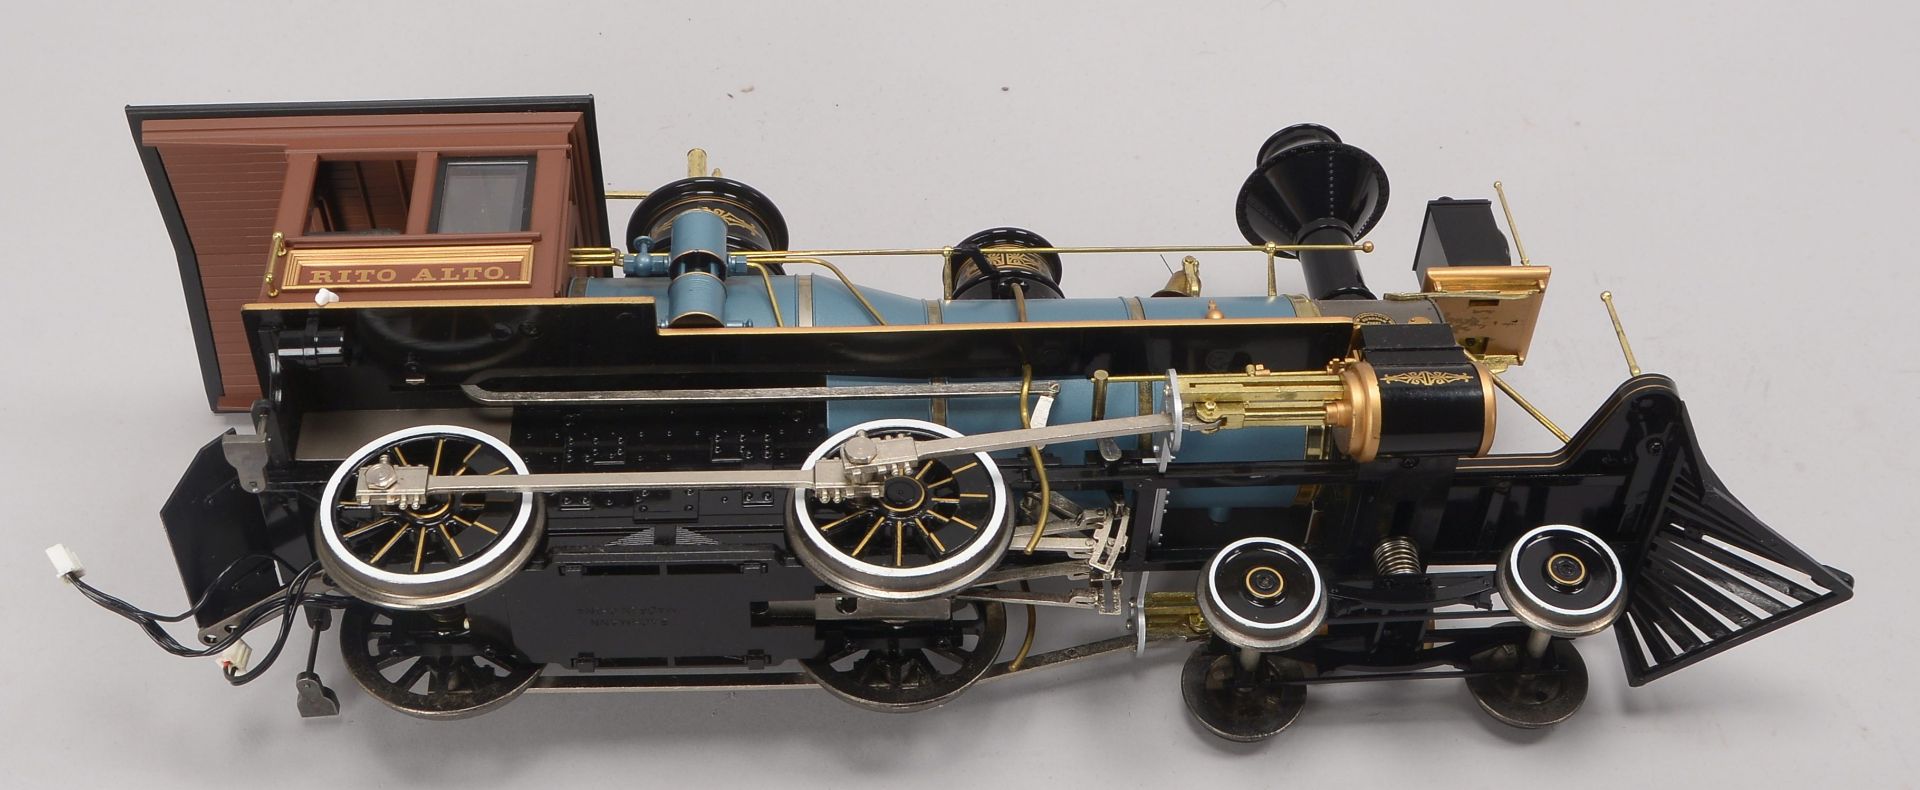 Bachmann Spektrum, Lokomotive m. Schlepptender, Baldwin Locomotiv Works / Philadephia, Spur 45 mm, - - Image 4 of 4